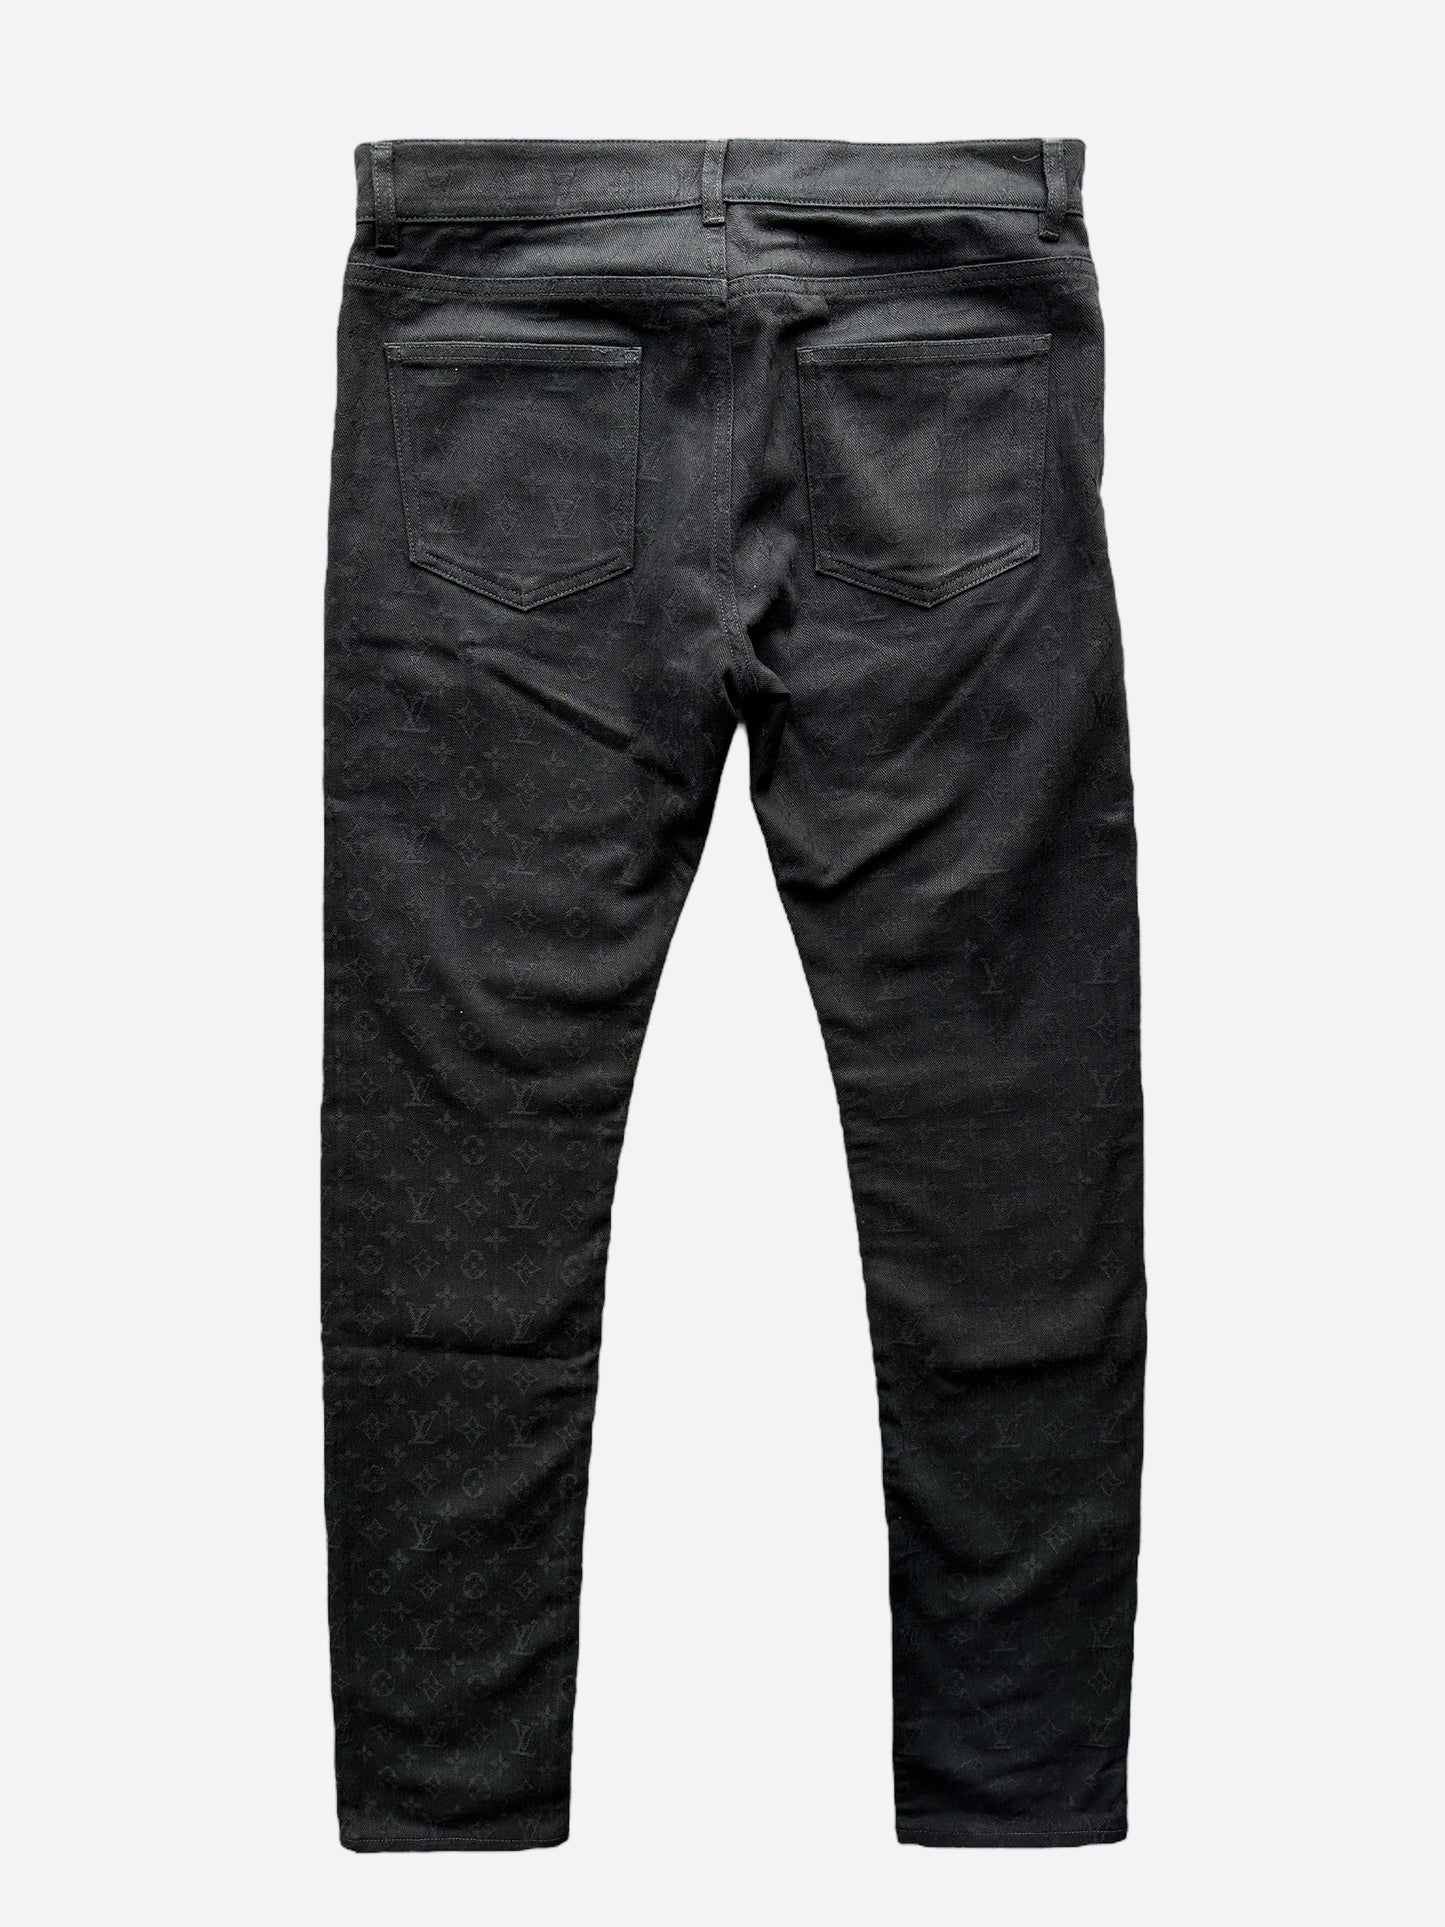 Louis Vuitton Slim Stretch Denim Pants BLACK. Size 32